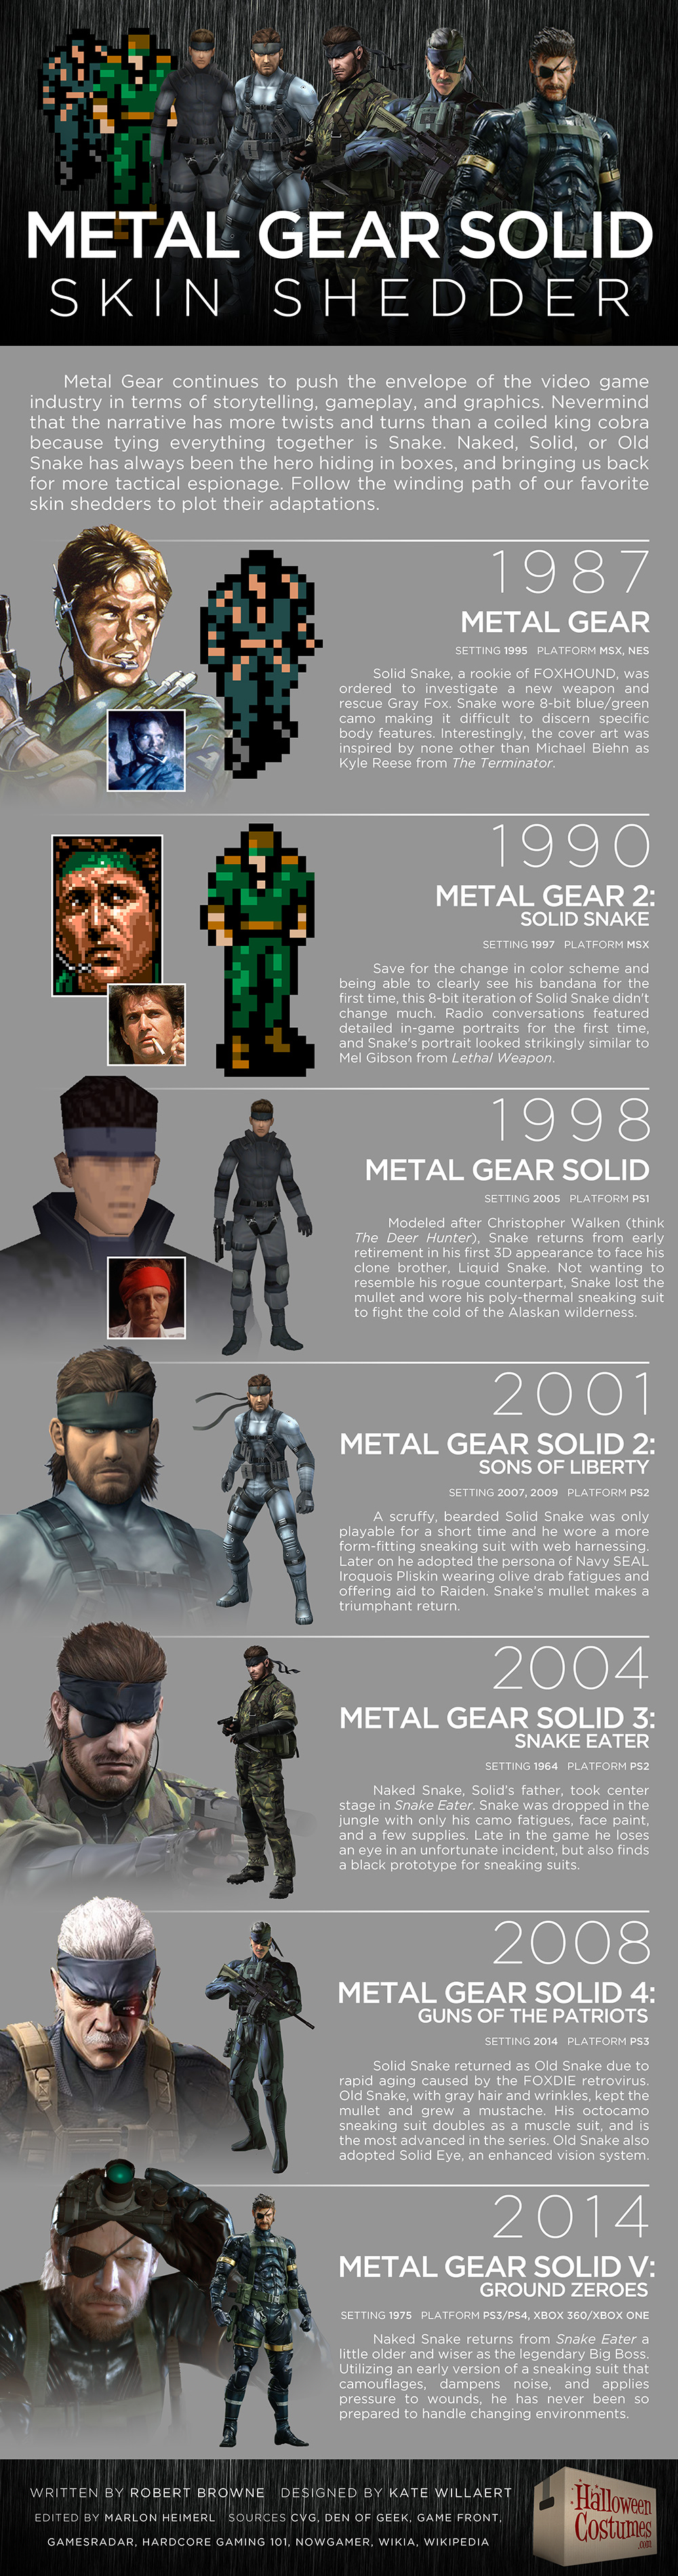 Metal-Gear-Solid-evolucion